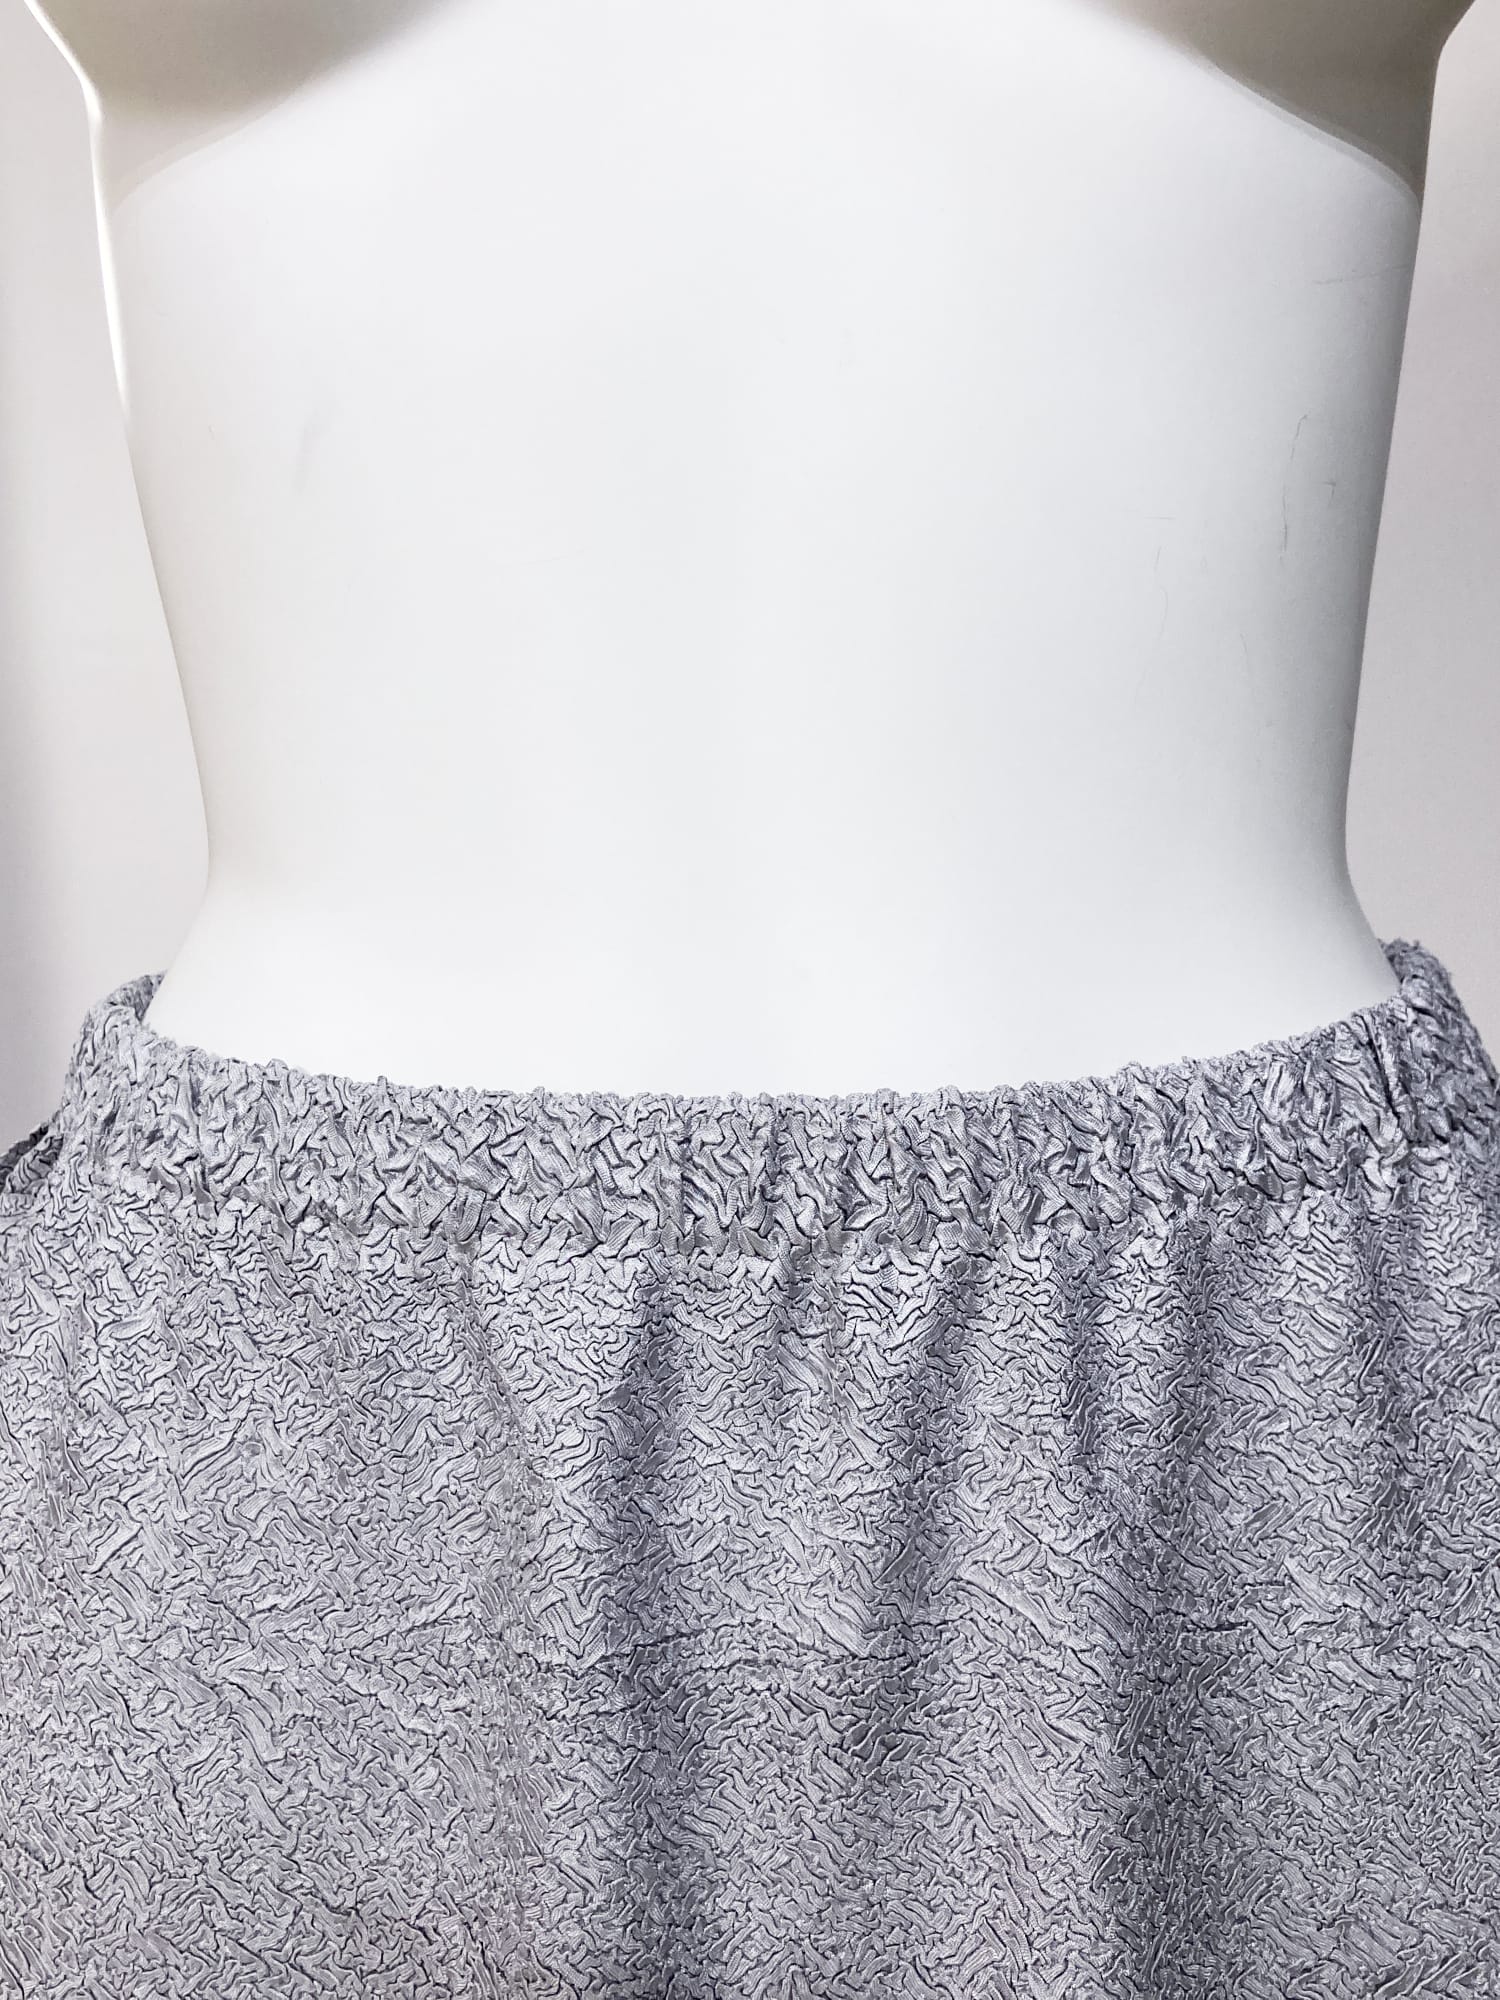 Wrinqle Inoue Pleats grey wrinkled polyester asymmetrical maxi skirt